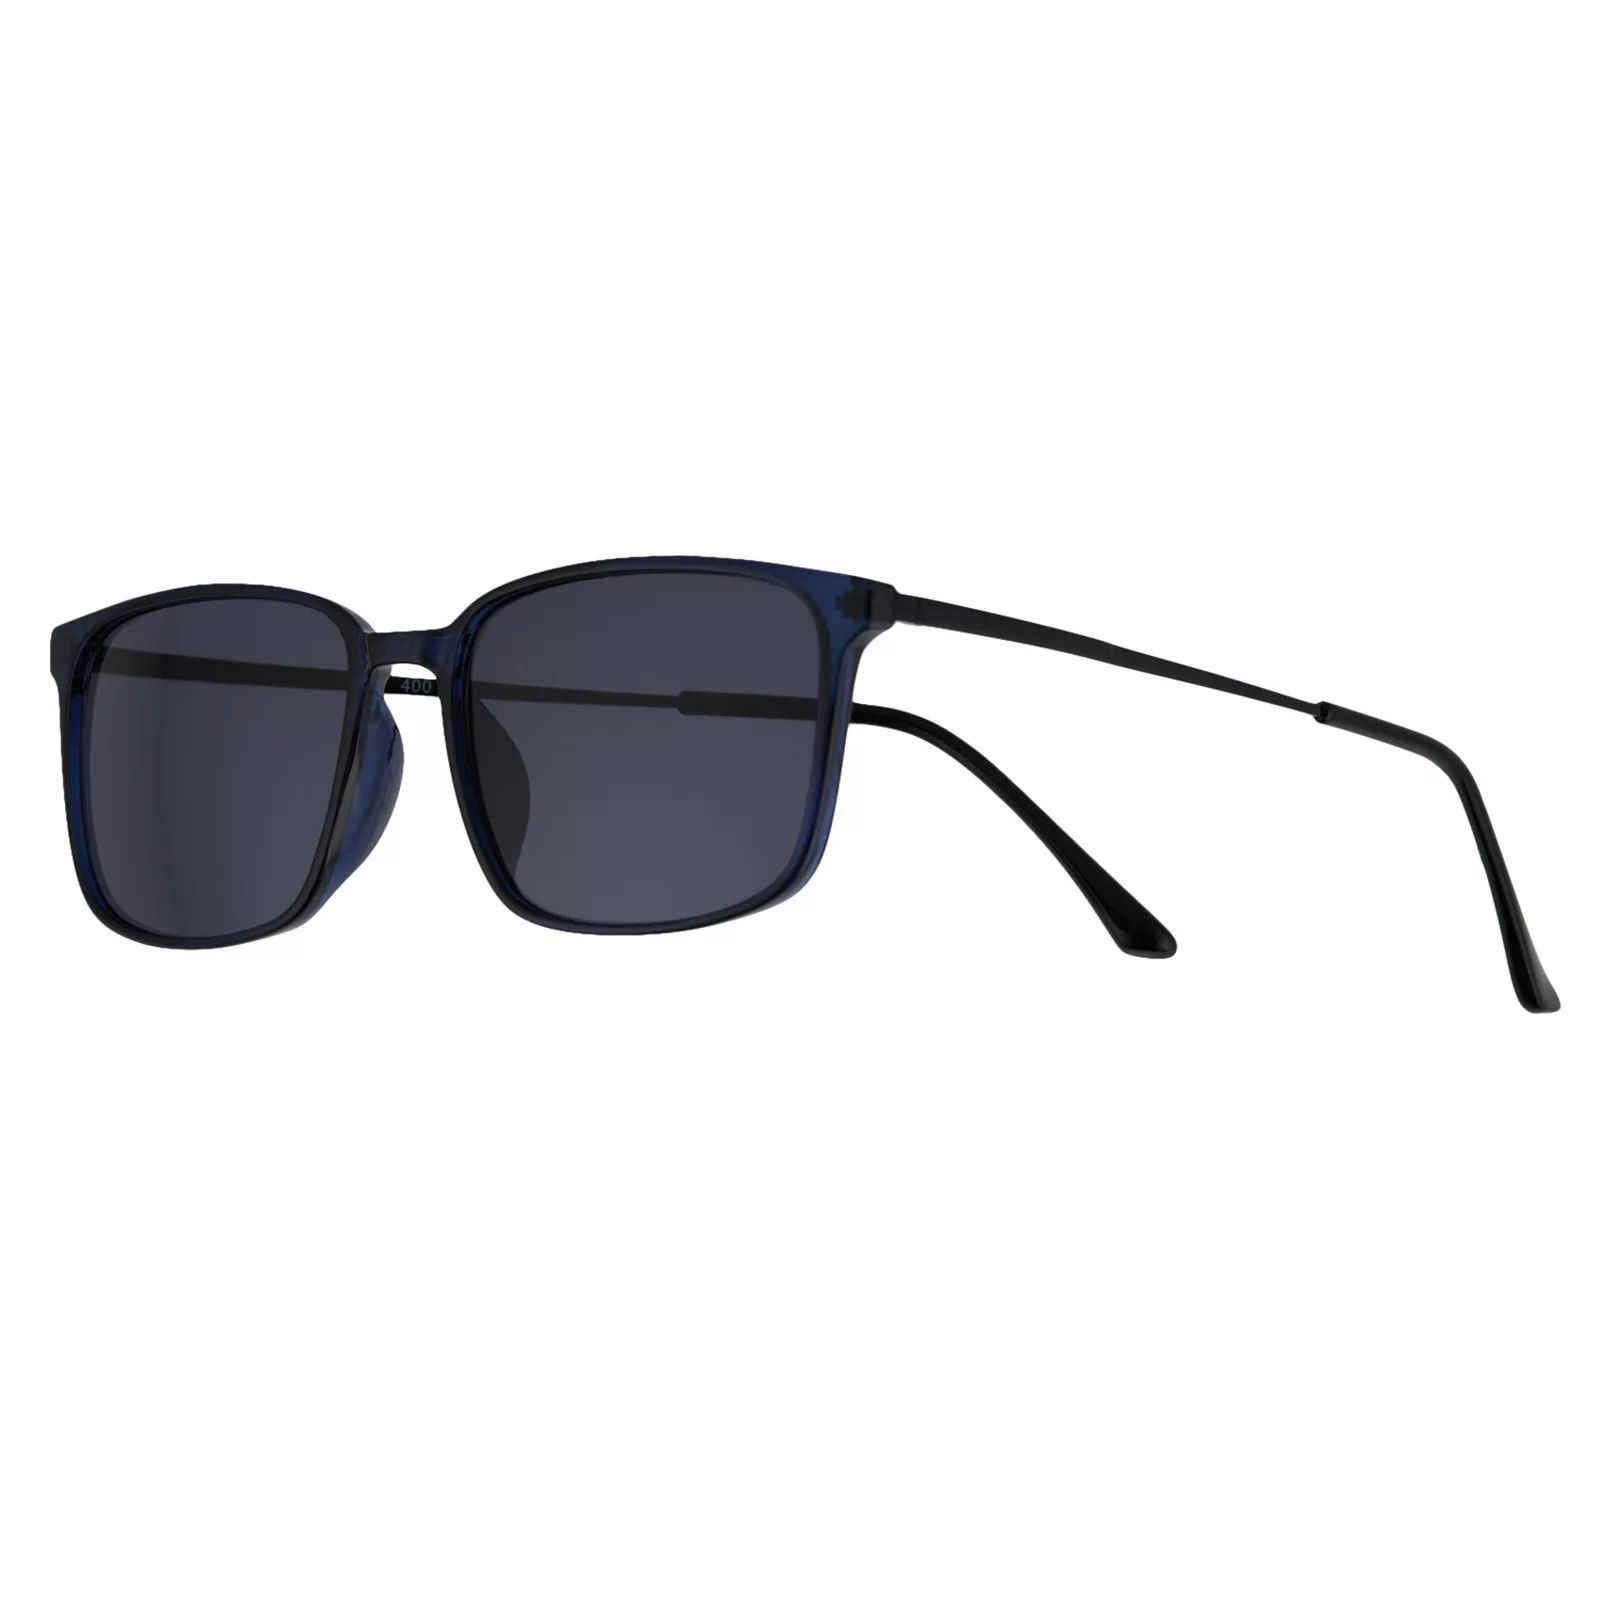 Men's Apt. 9 52mm Navy Crystal & Black Square Sunglasses, Blue | Kohl's